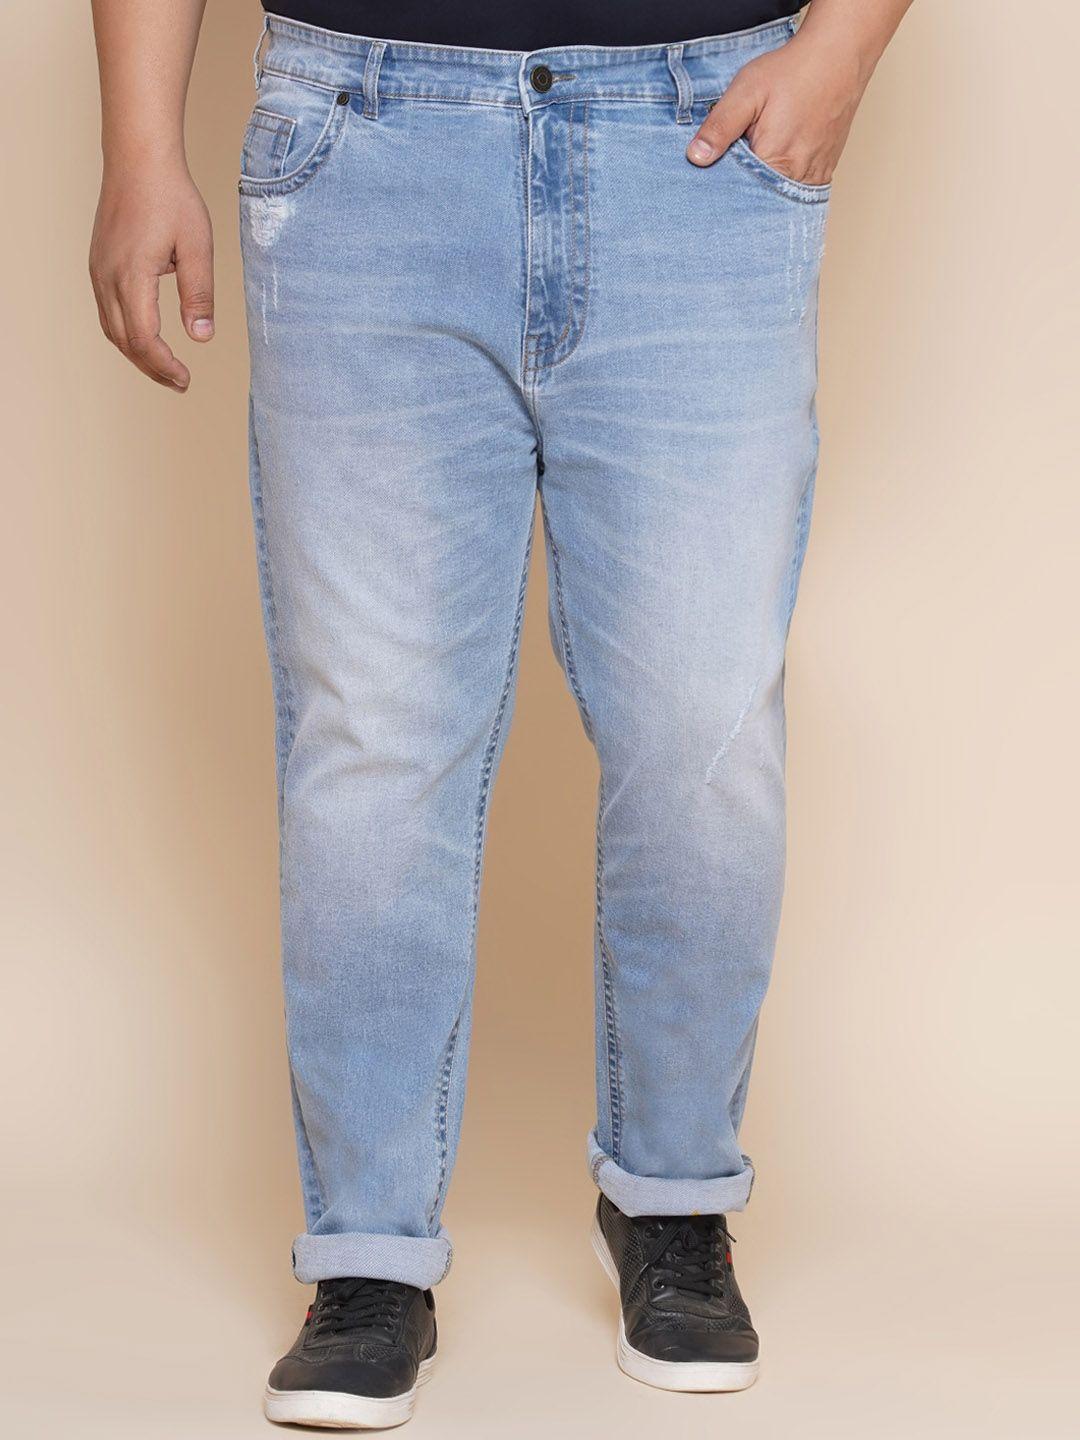 john pride men plus size regular fit low distress heavy fade stretchable jeans